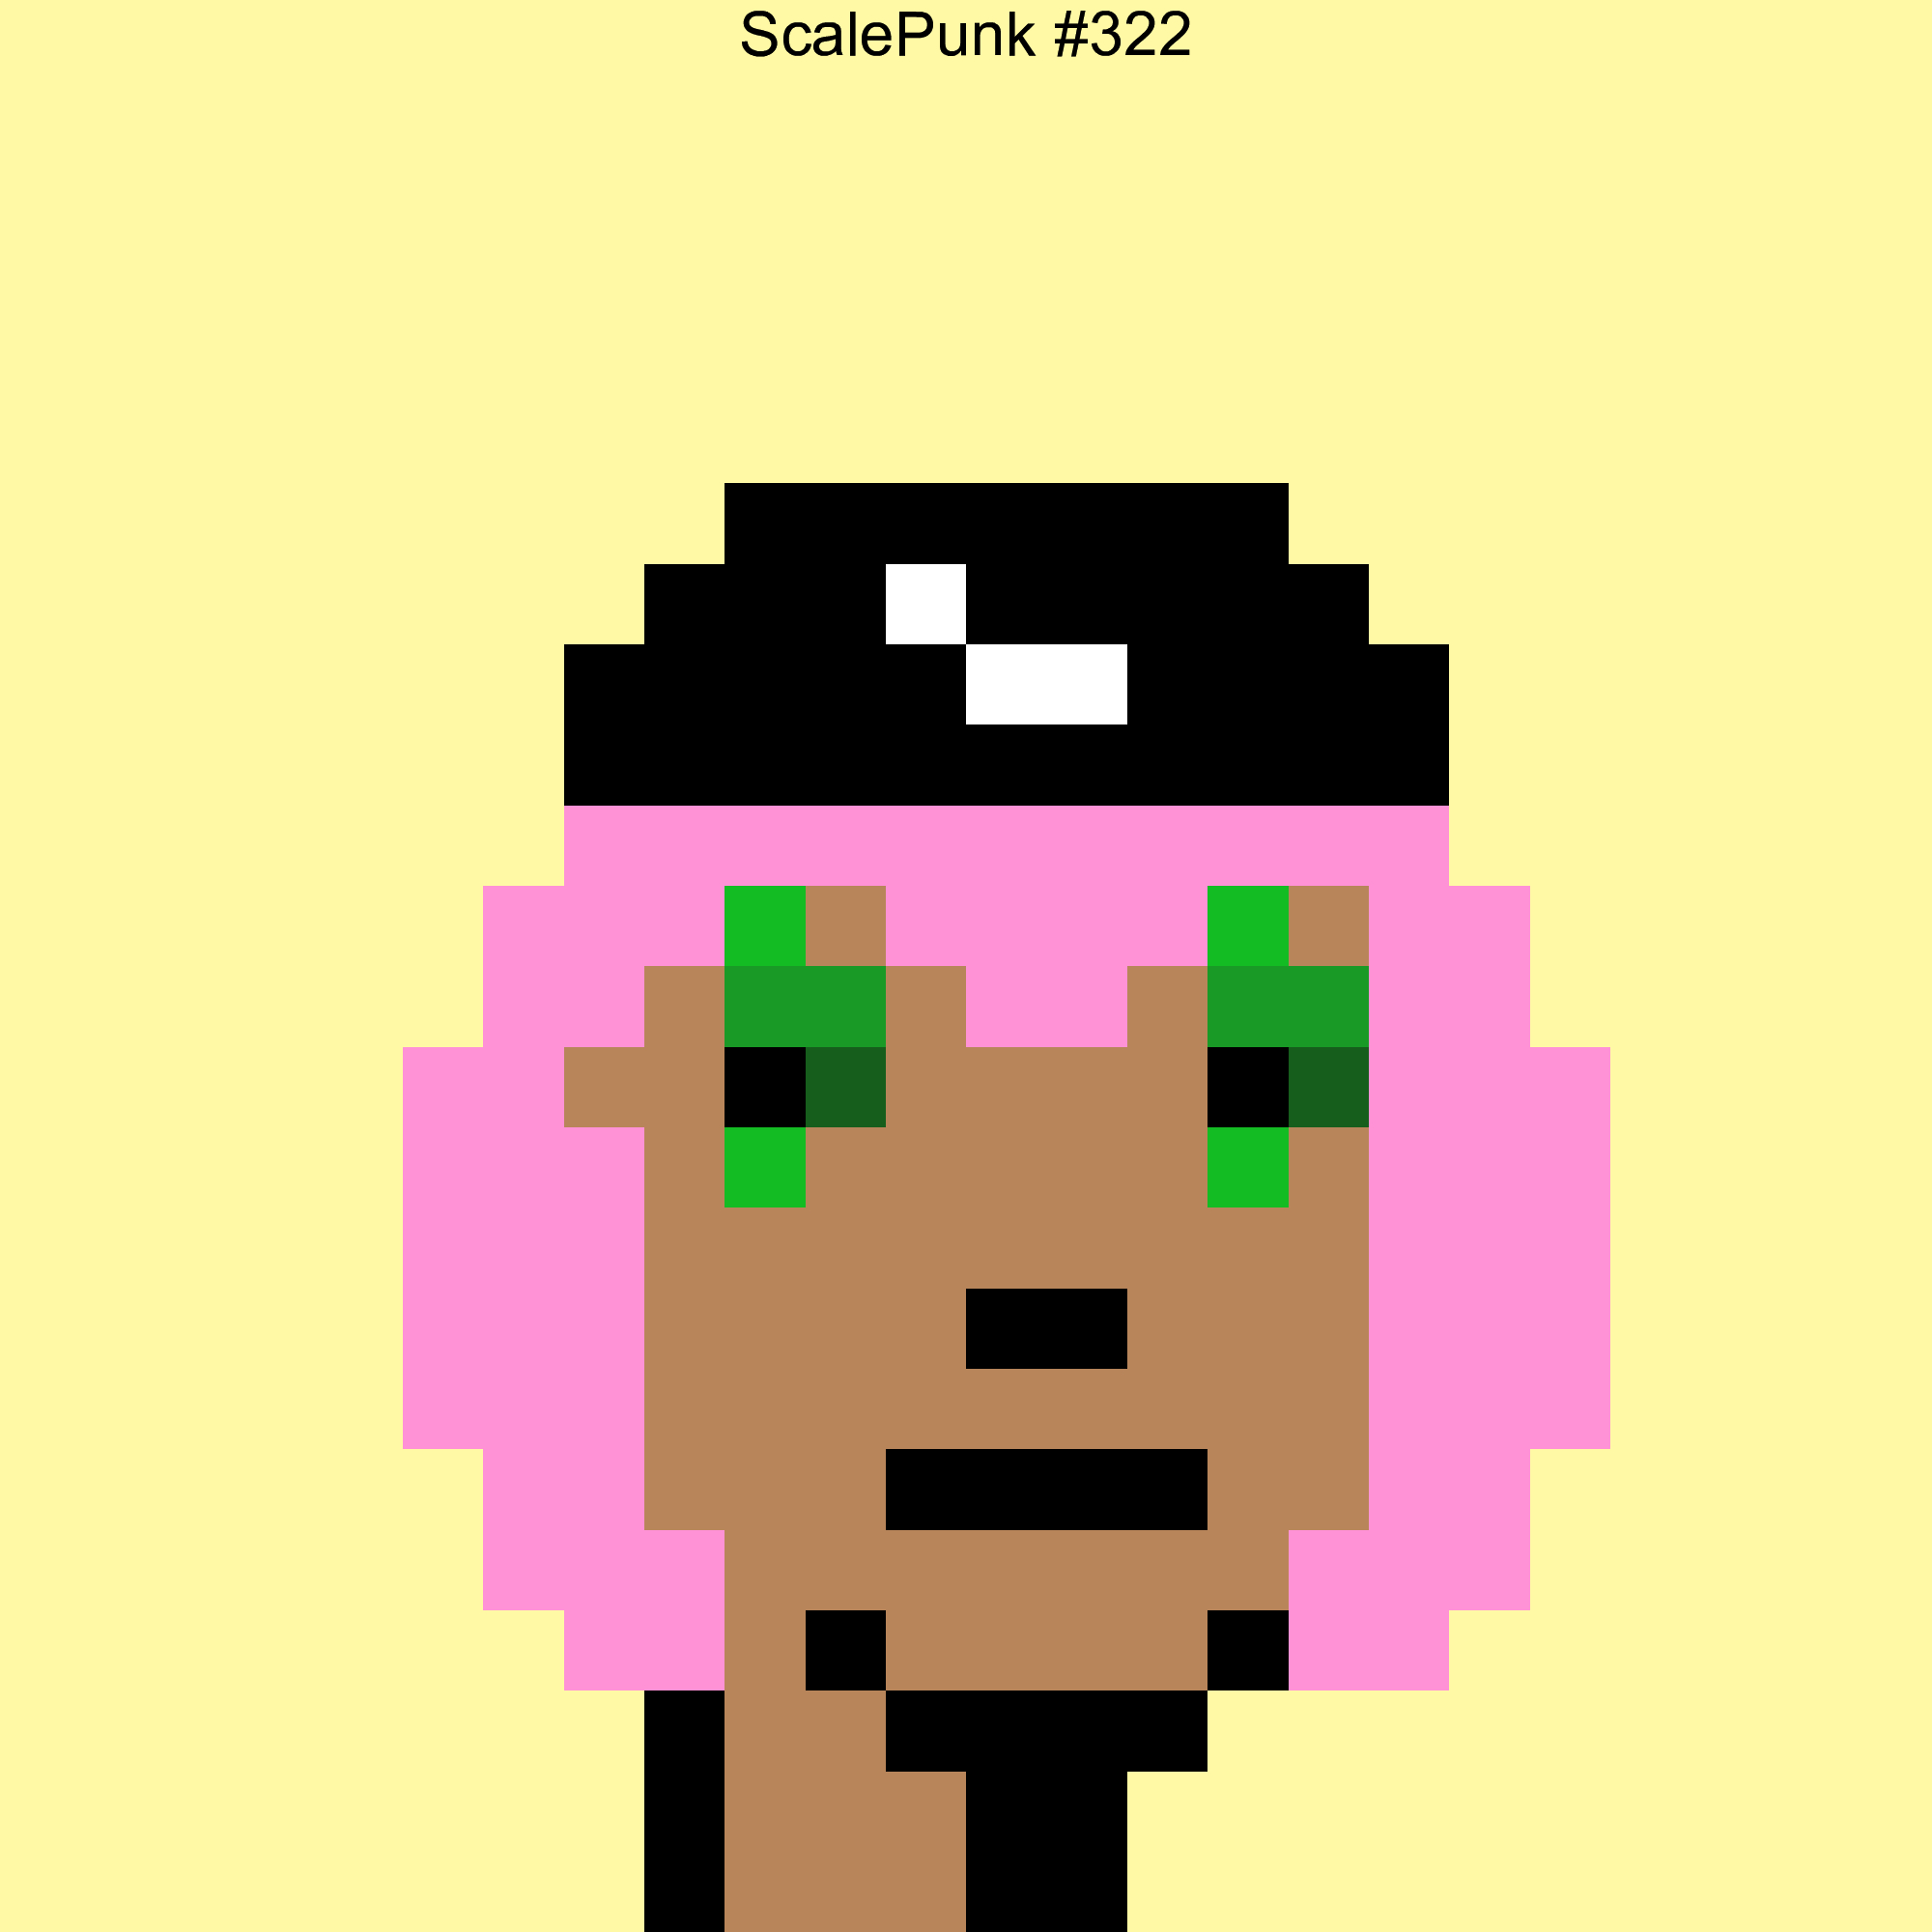 Punk 322